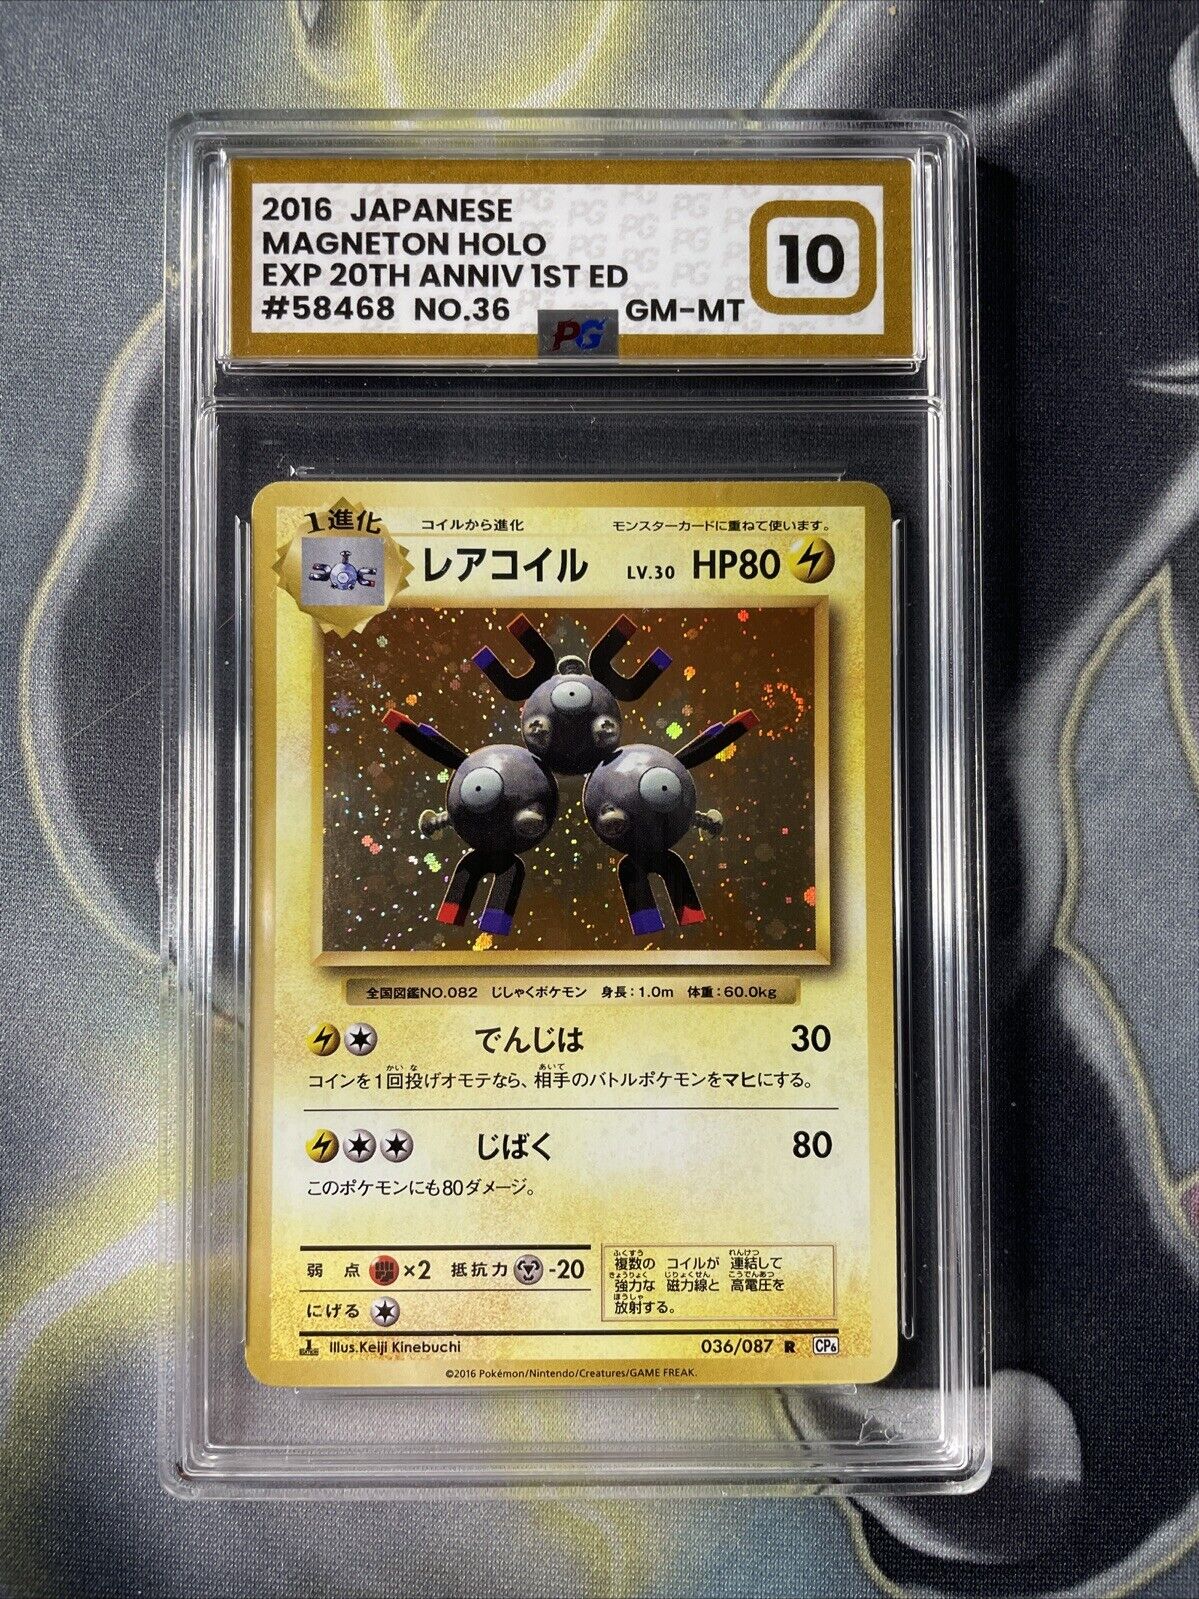 PG 10 Magneton Holo 036/087 CP6 20th Anniversary GEM MINT Japanese Pokemon Card